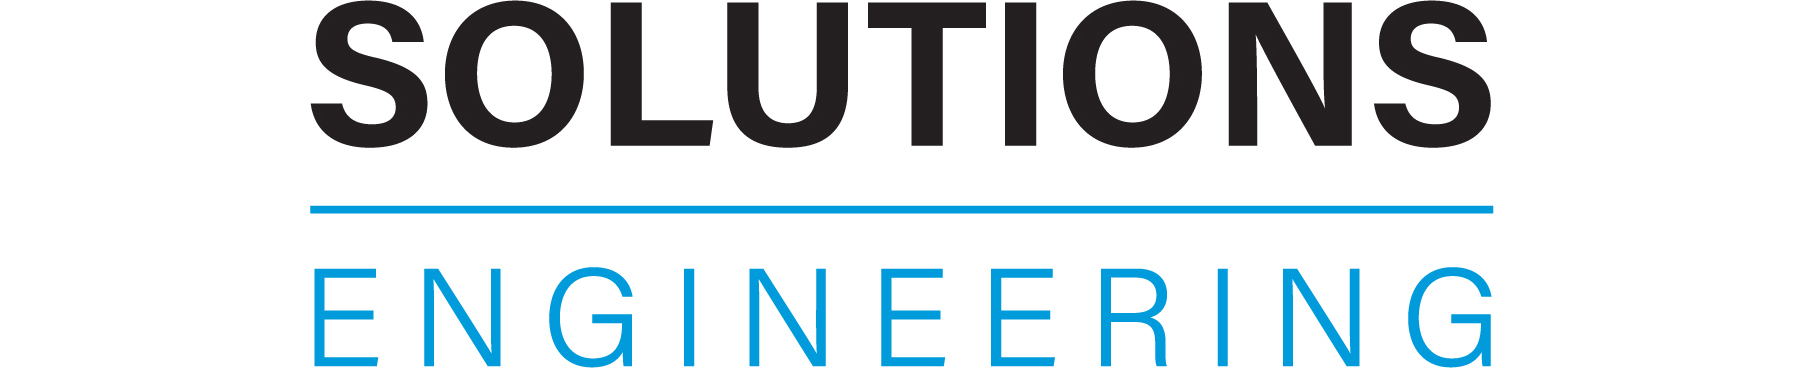 Solutions-Engineering-Logo